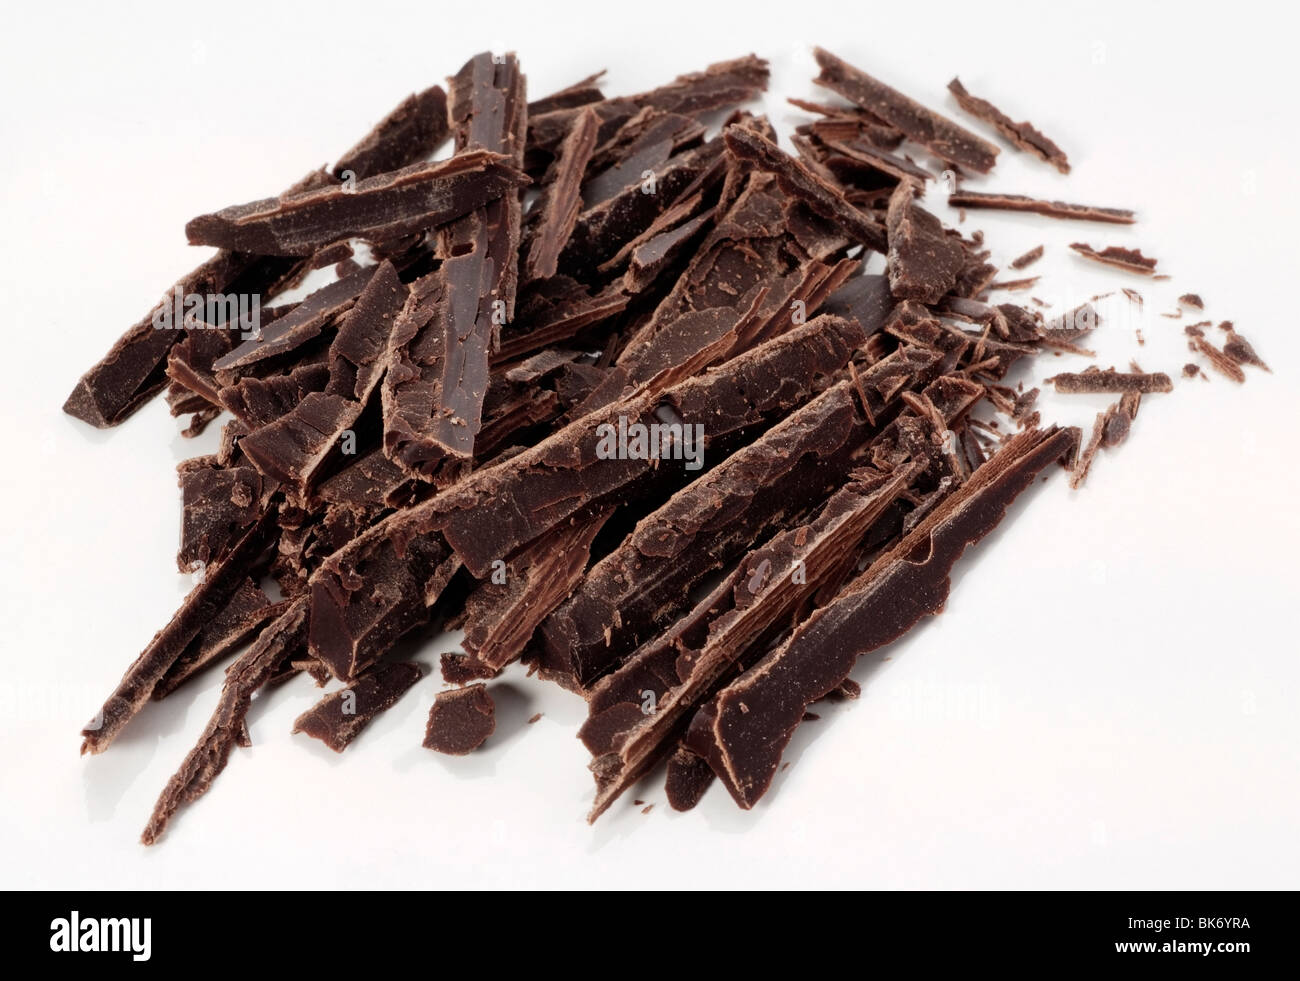 Chocolate shavings Stock Photo